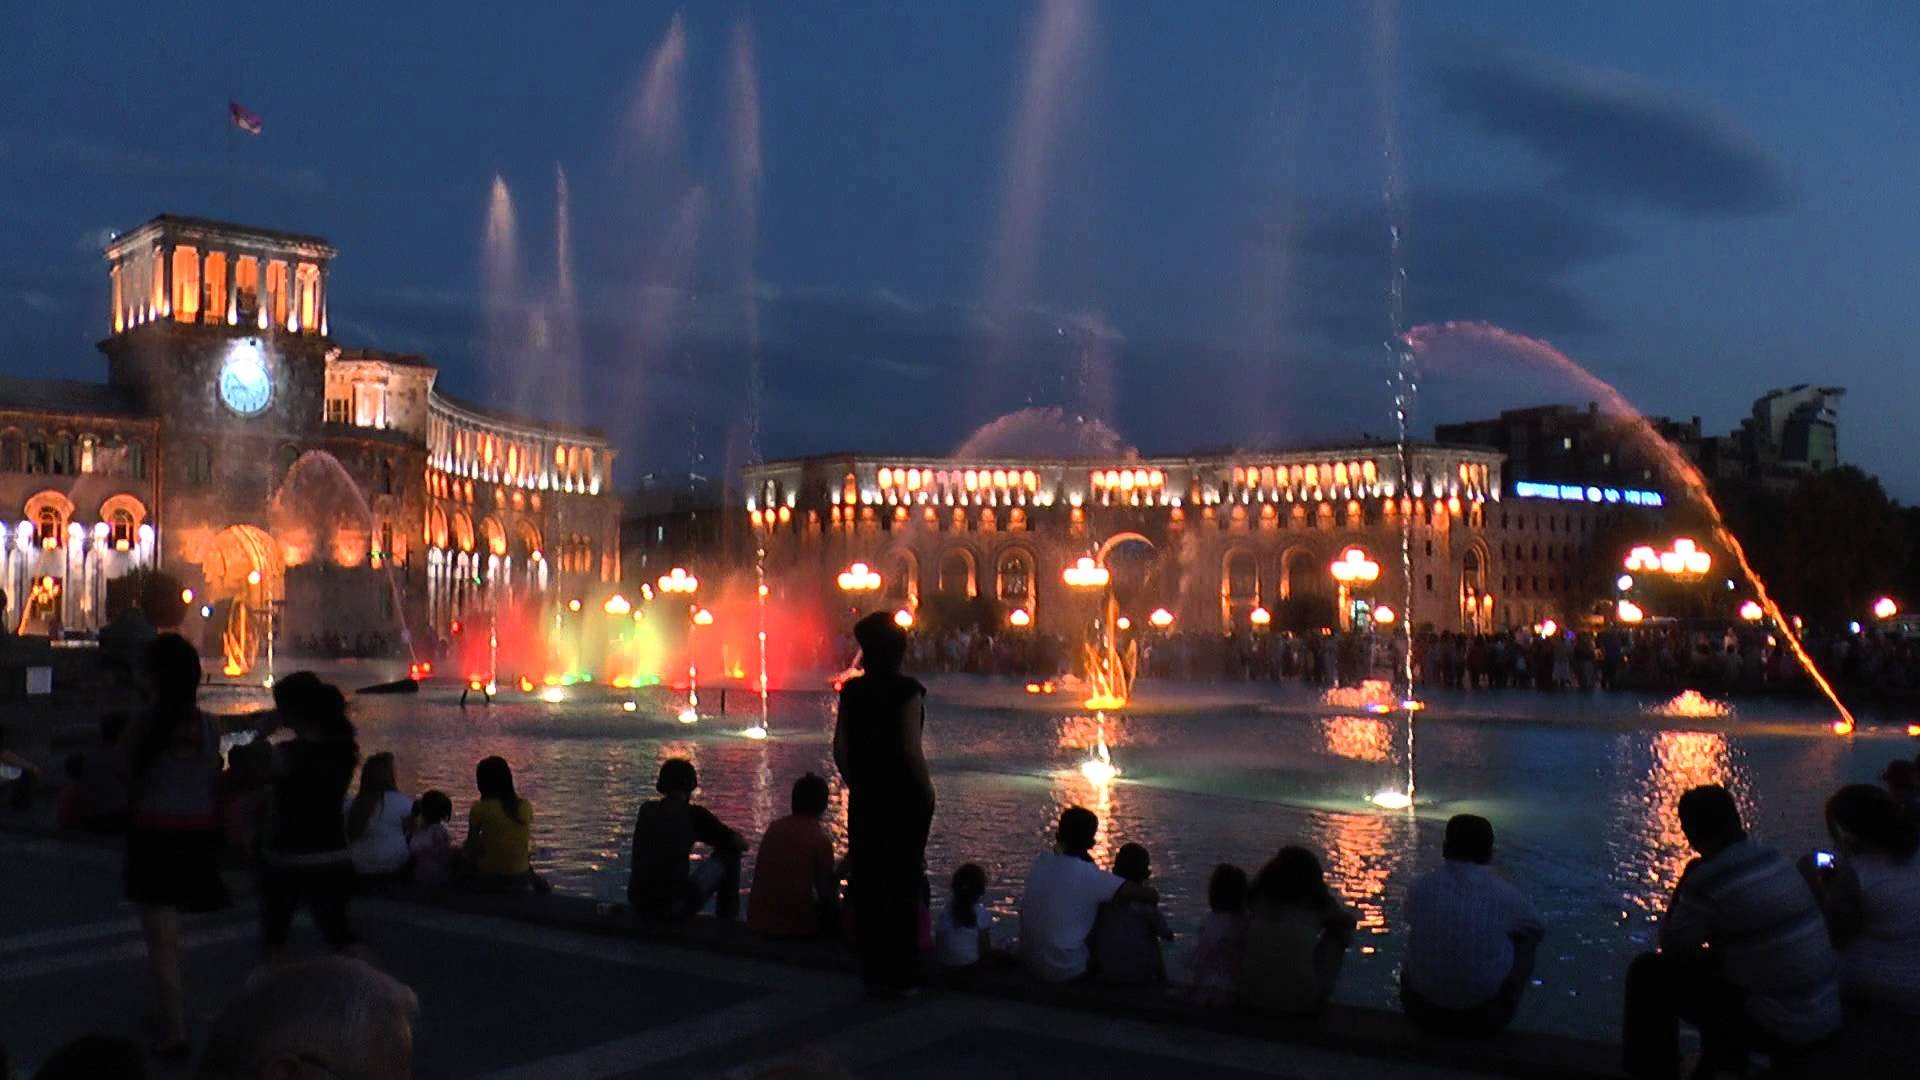 Ереван градусы. Площадь Республики Ереван. Площадь Республики Ереван ночью. Центральная площадь Еревана. Площадь Республики Ереван зимой.